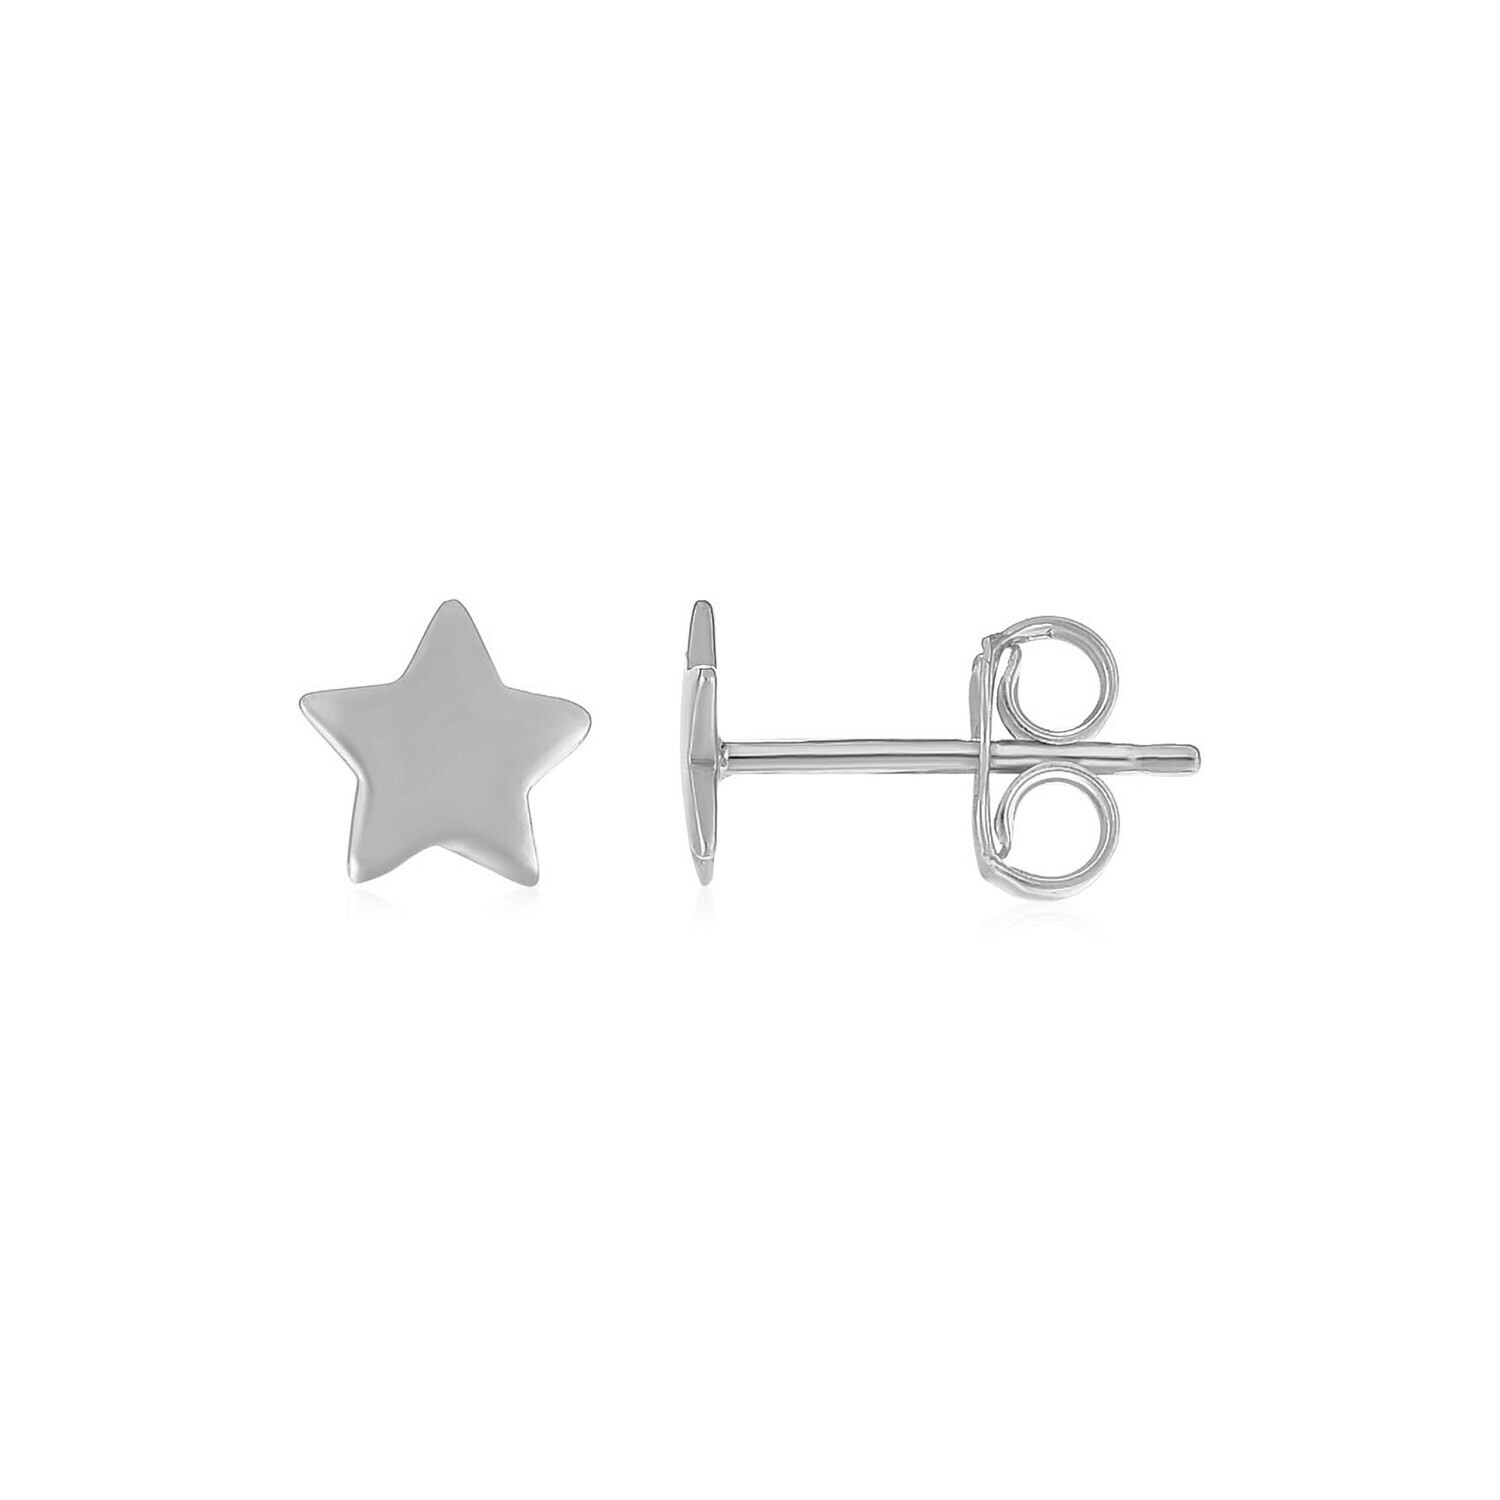 14k White Gold Post Earrings with Stars